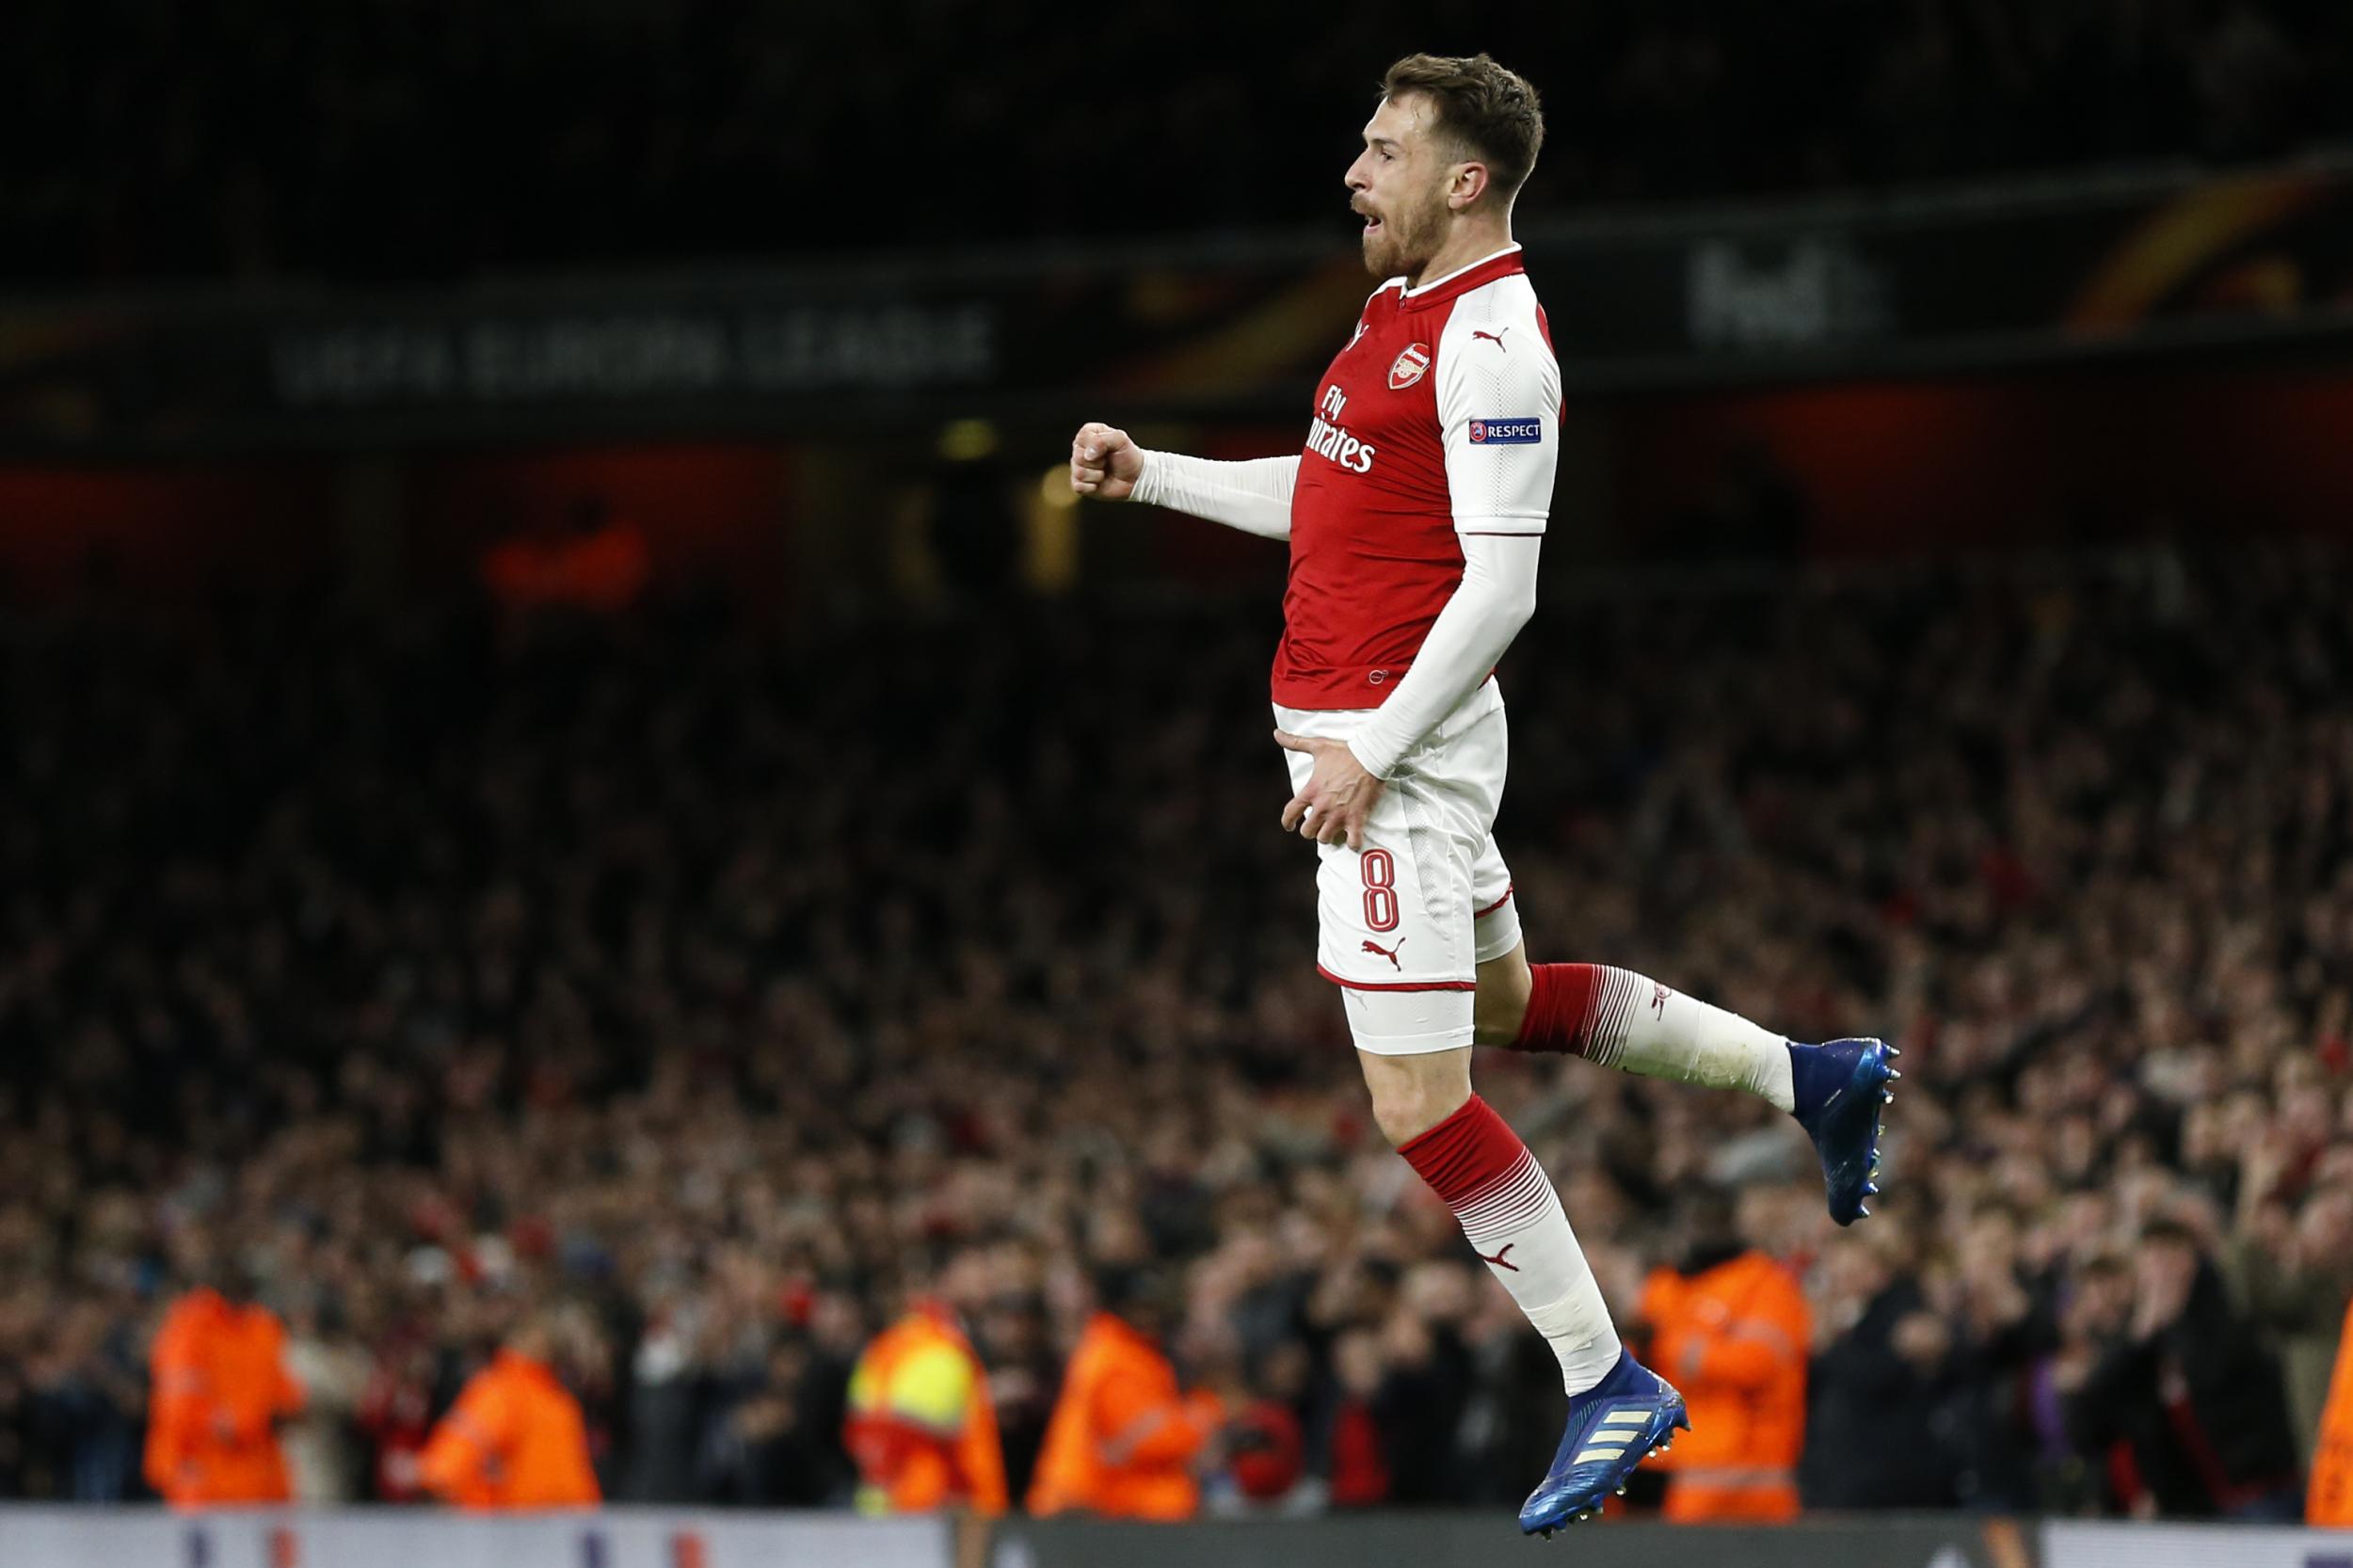 Aaron Ramsey starred in an impressive Arsenal display